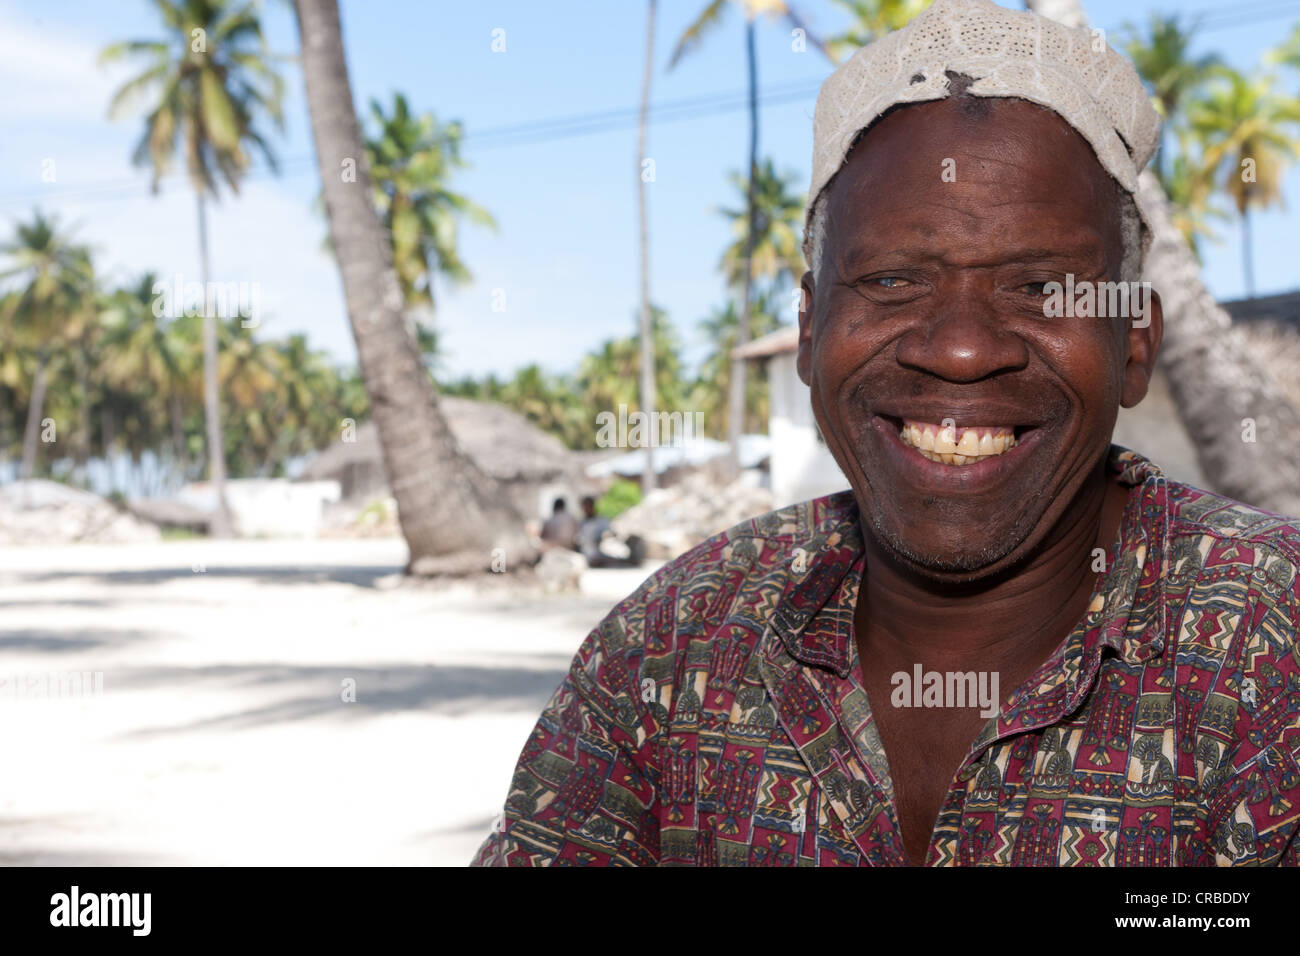 Half-blind old man, Jambiani, Zanzibar, Tanzania, Africa Stock Photo